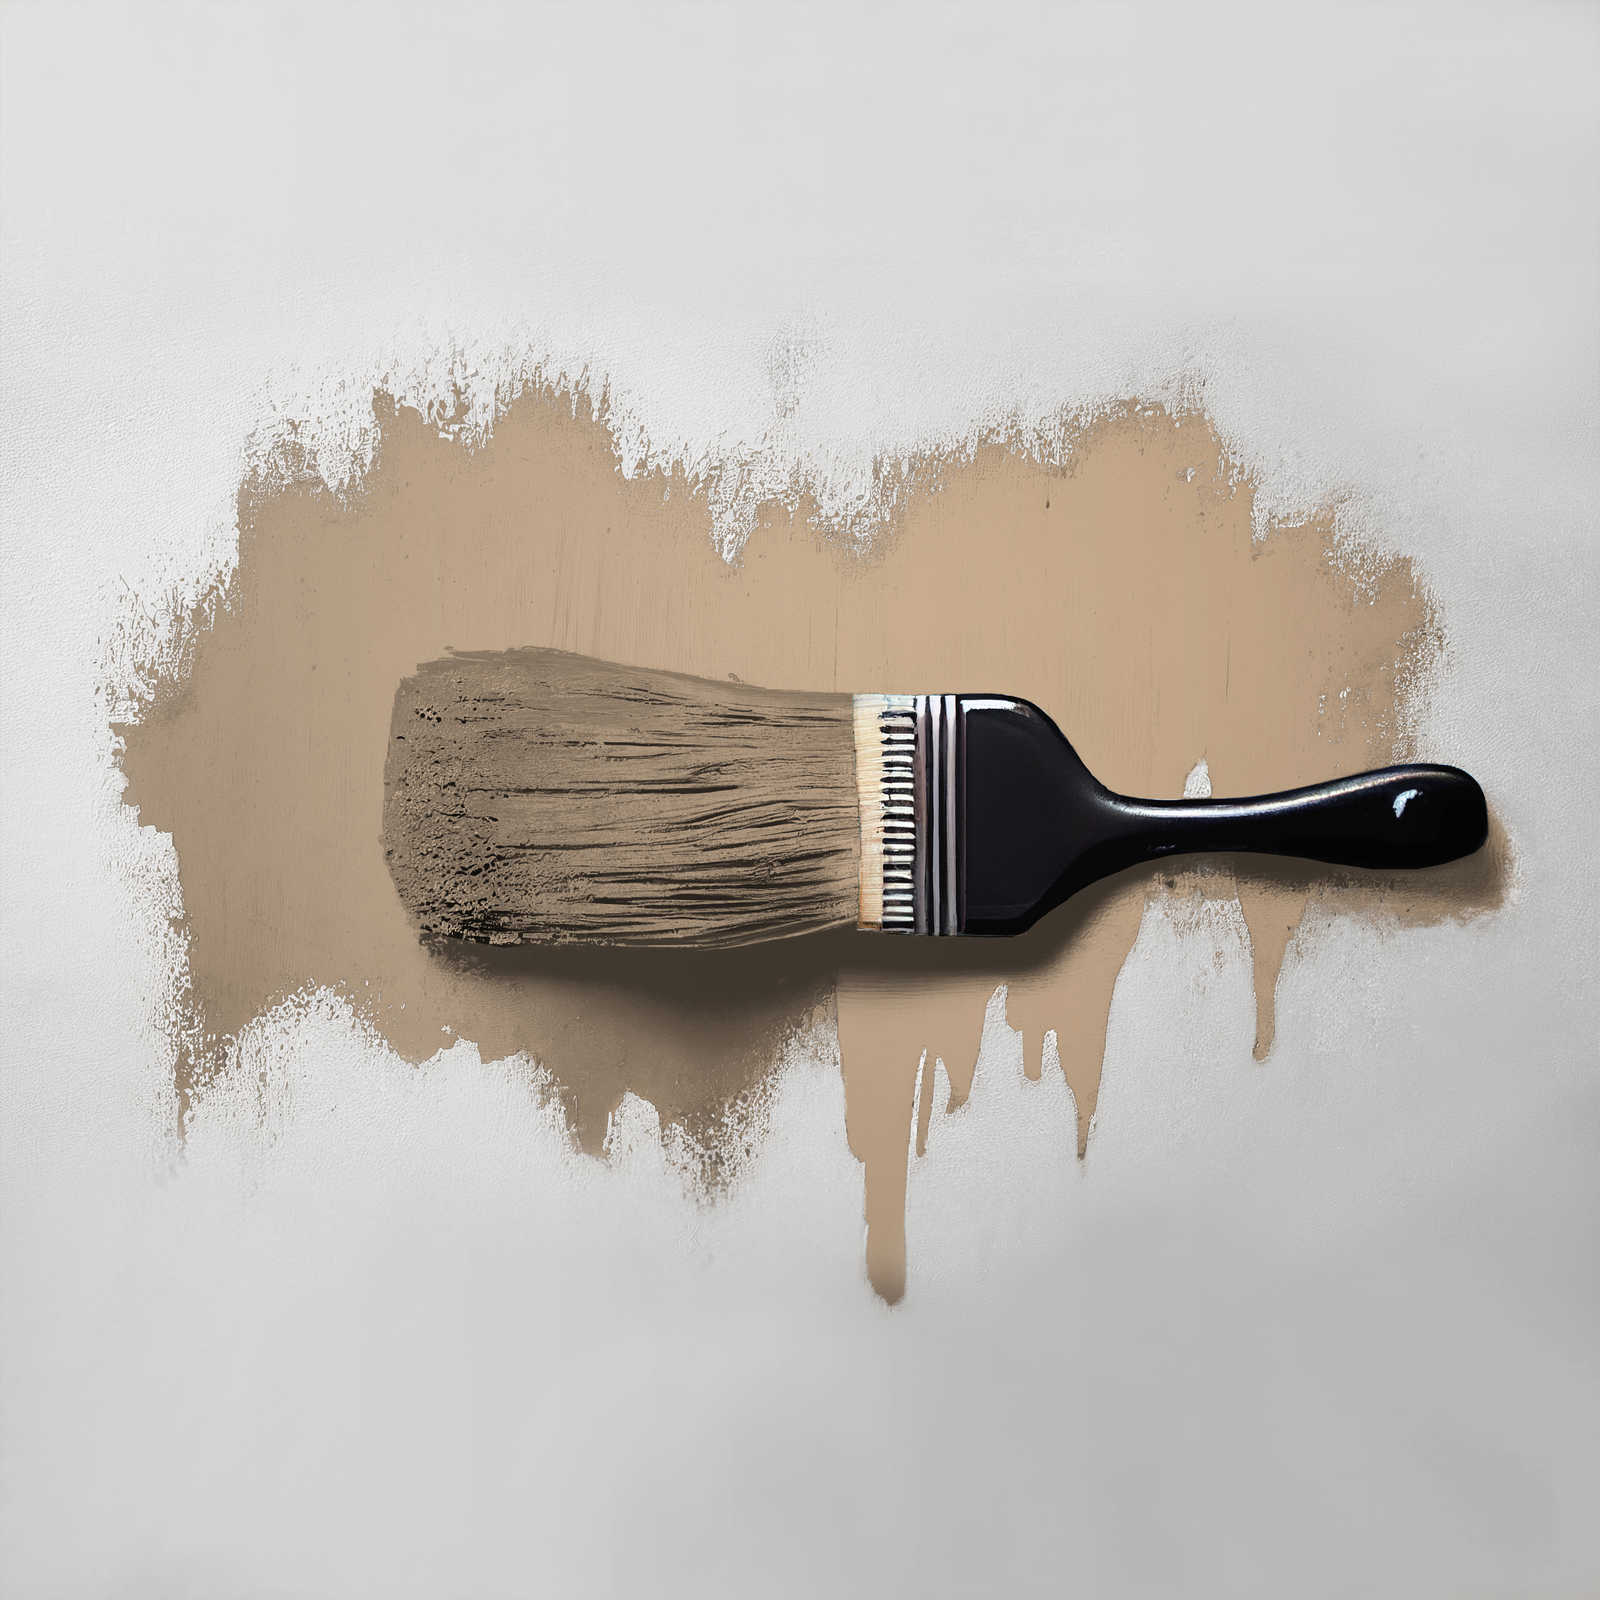             Wall Paint TCK6005 »Friendly Fennel« in homely beige brown – 5.0 litre
        